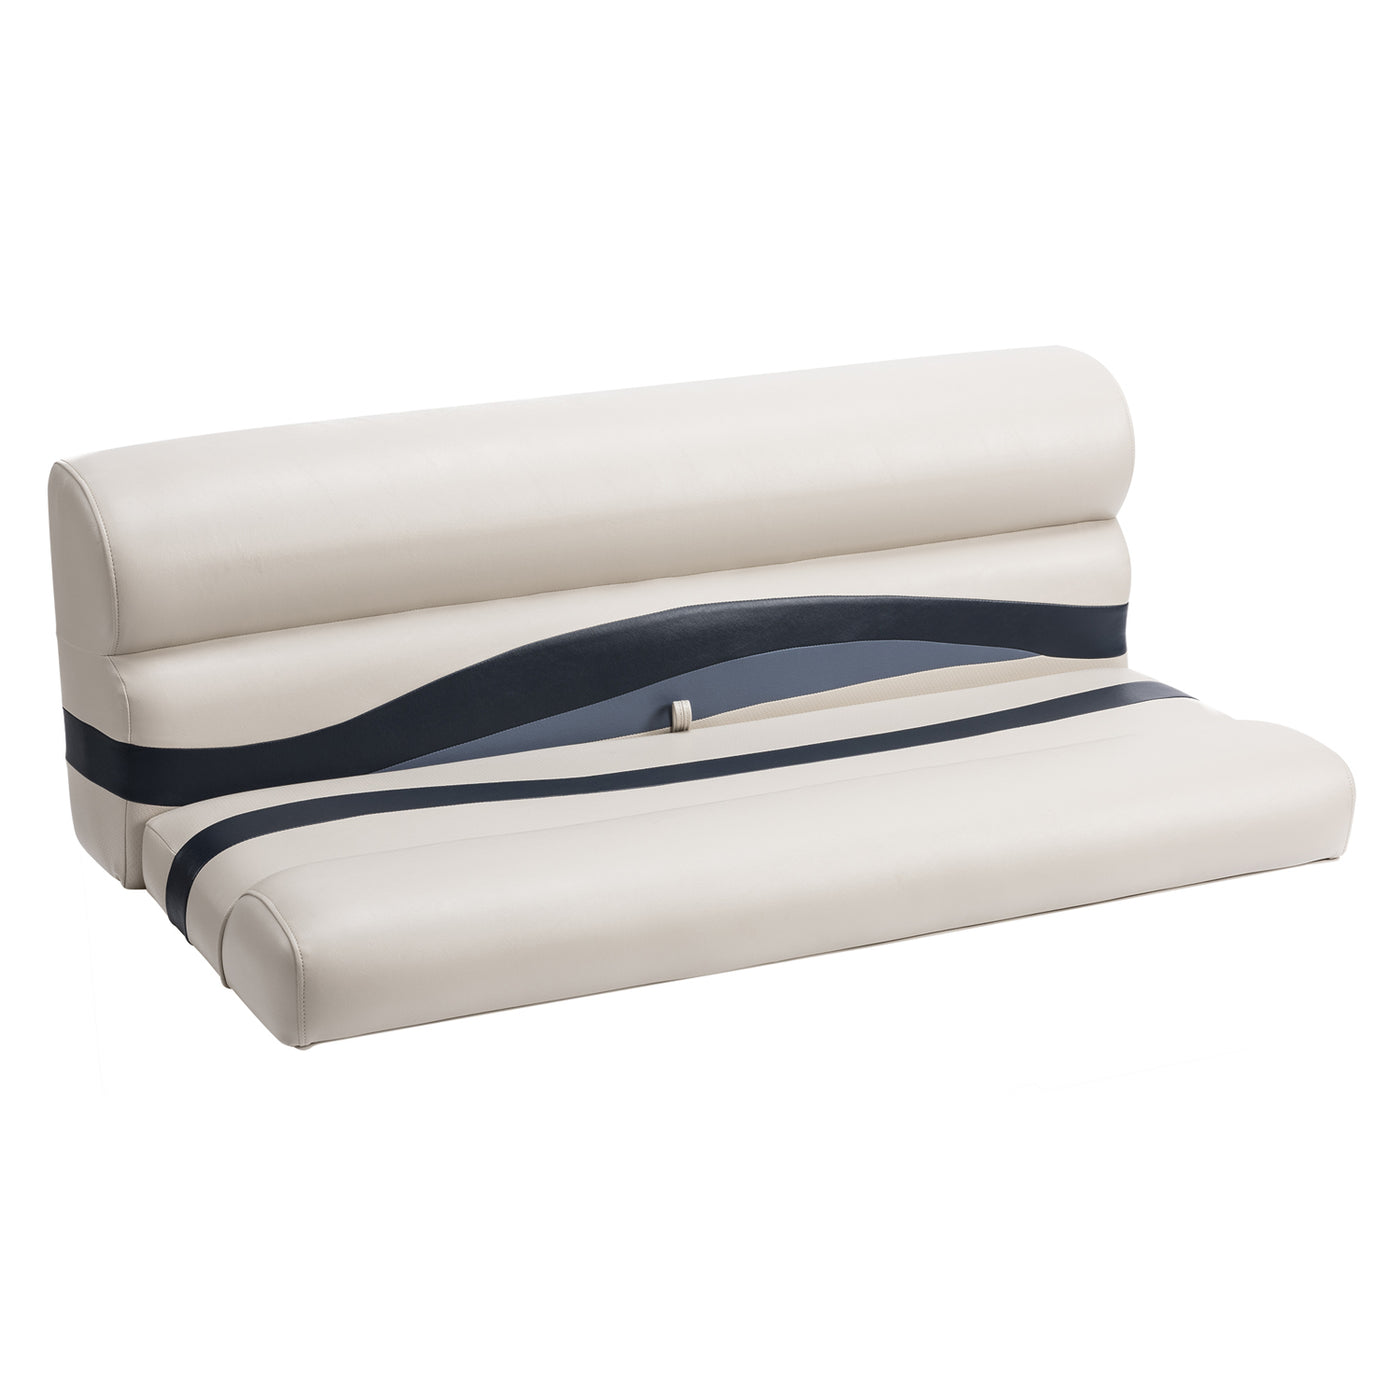 Wise Premier Pontoon Series, 50 Bench Seat Cushion ONLY – Pontoon